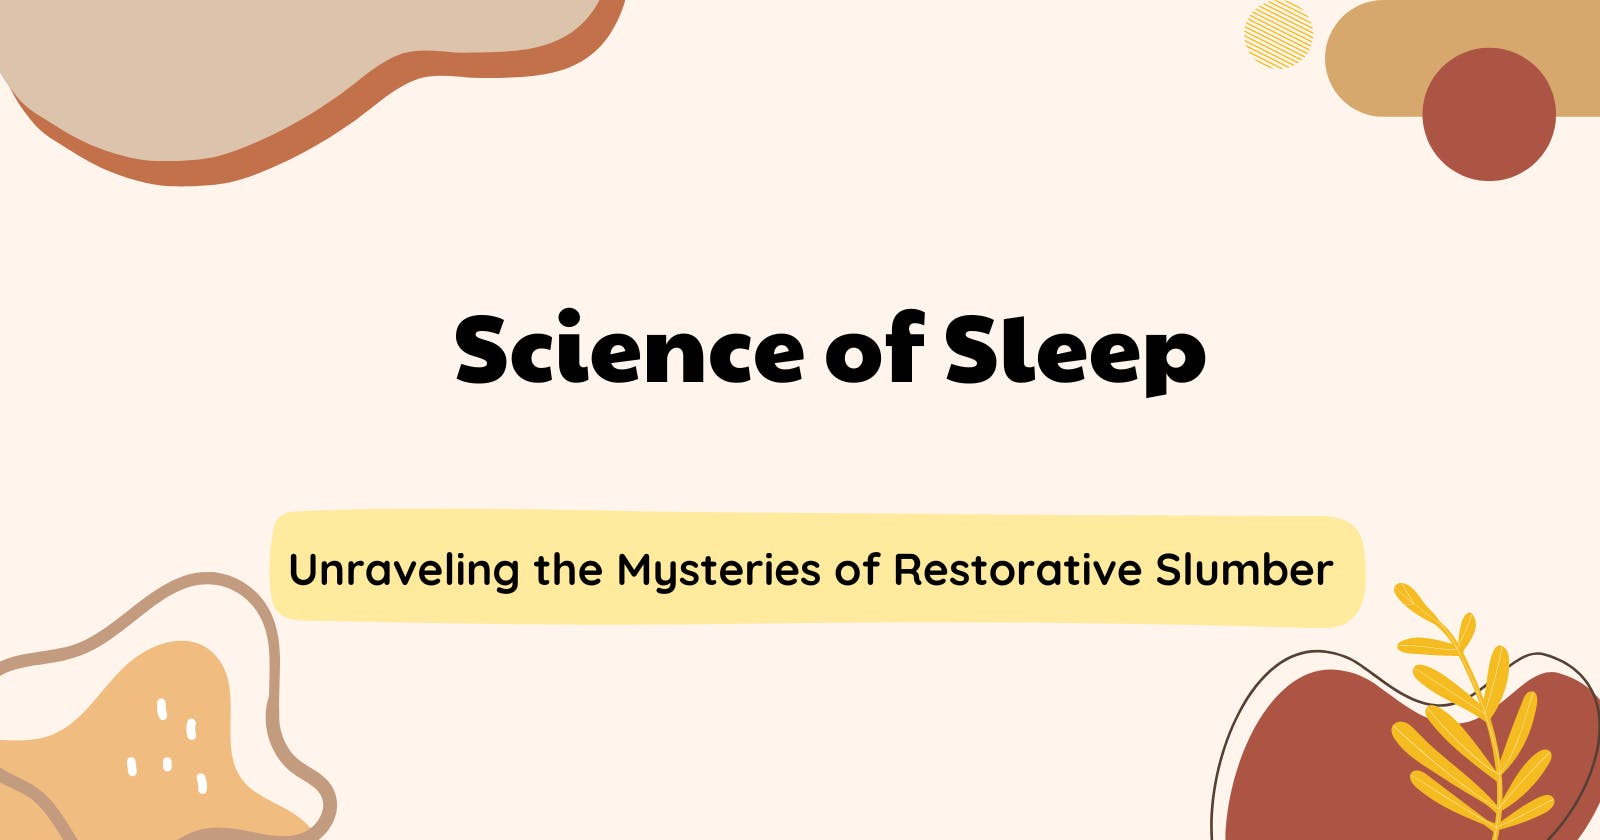 The Science of Sleep: Unraveling the Mysteries of Restorative Slumber